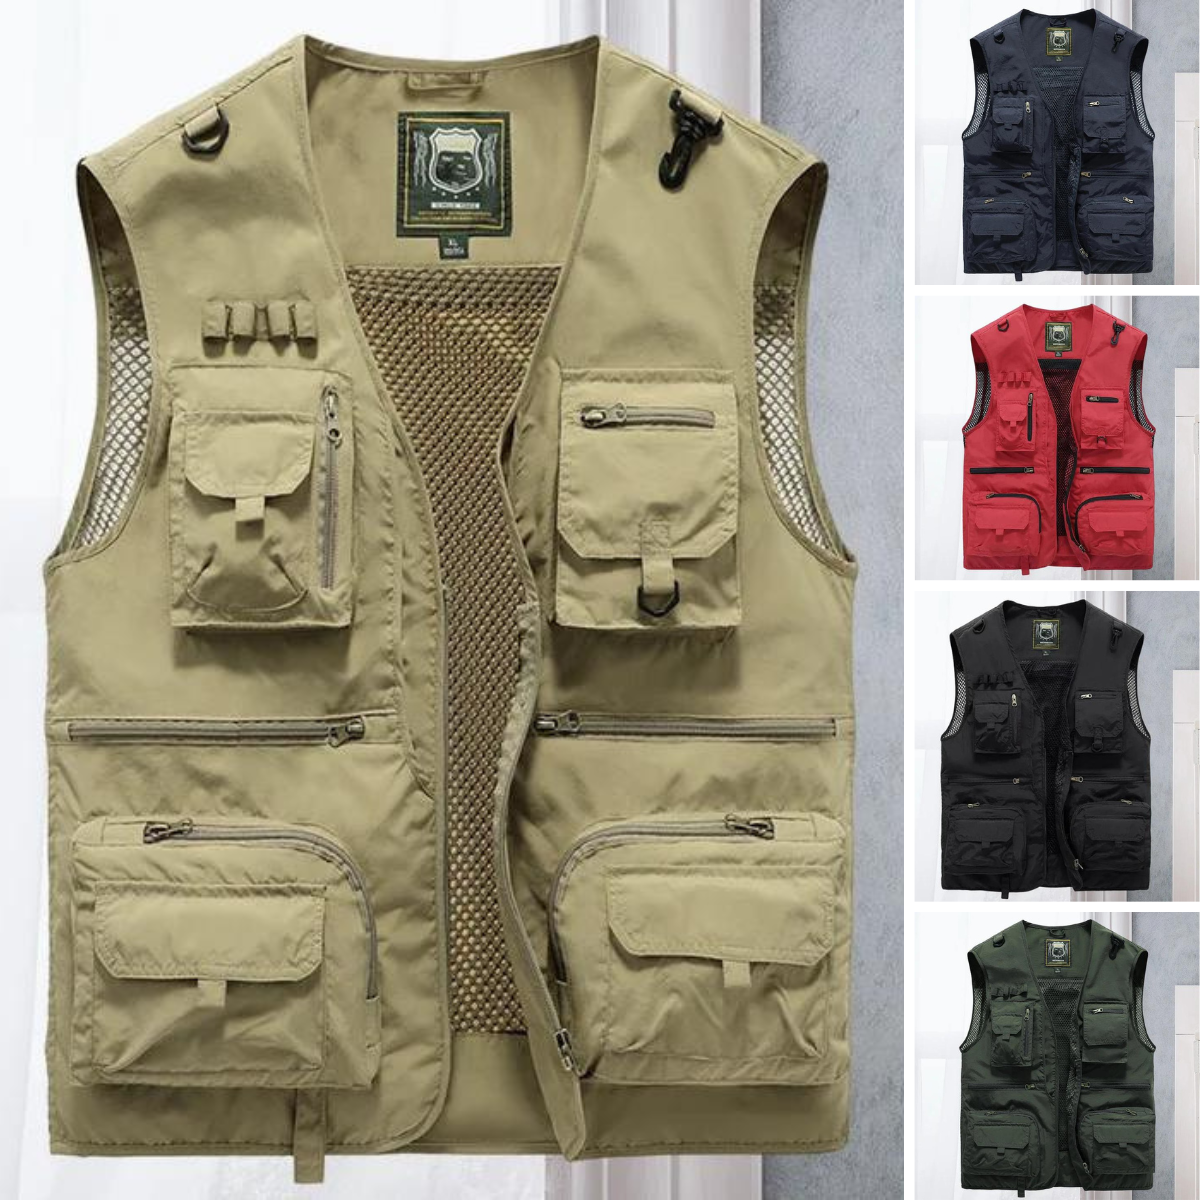 Jason - The new breathable zip cargo vest